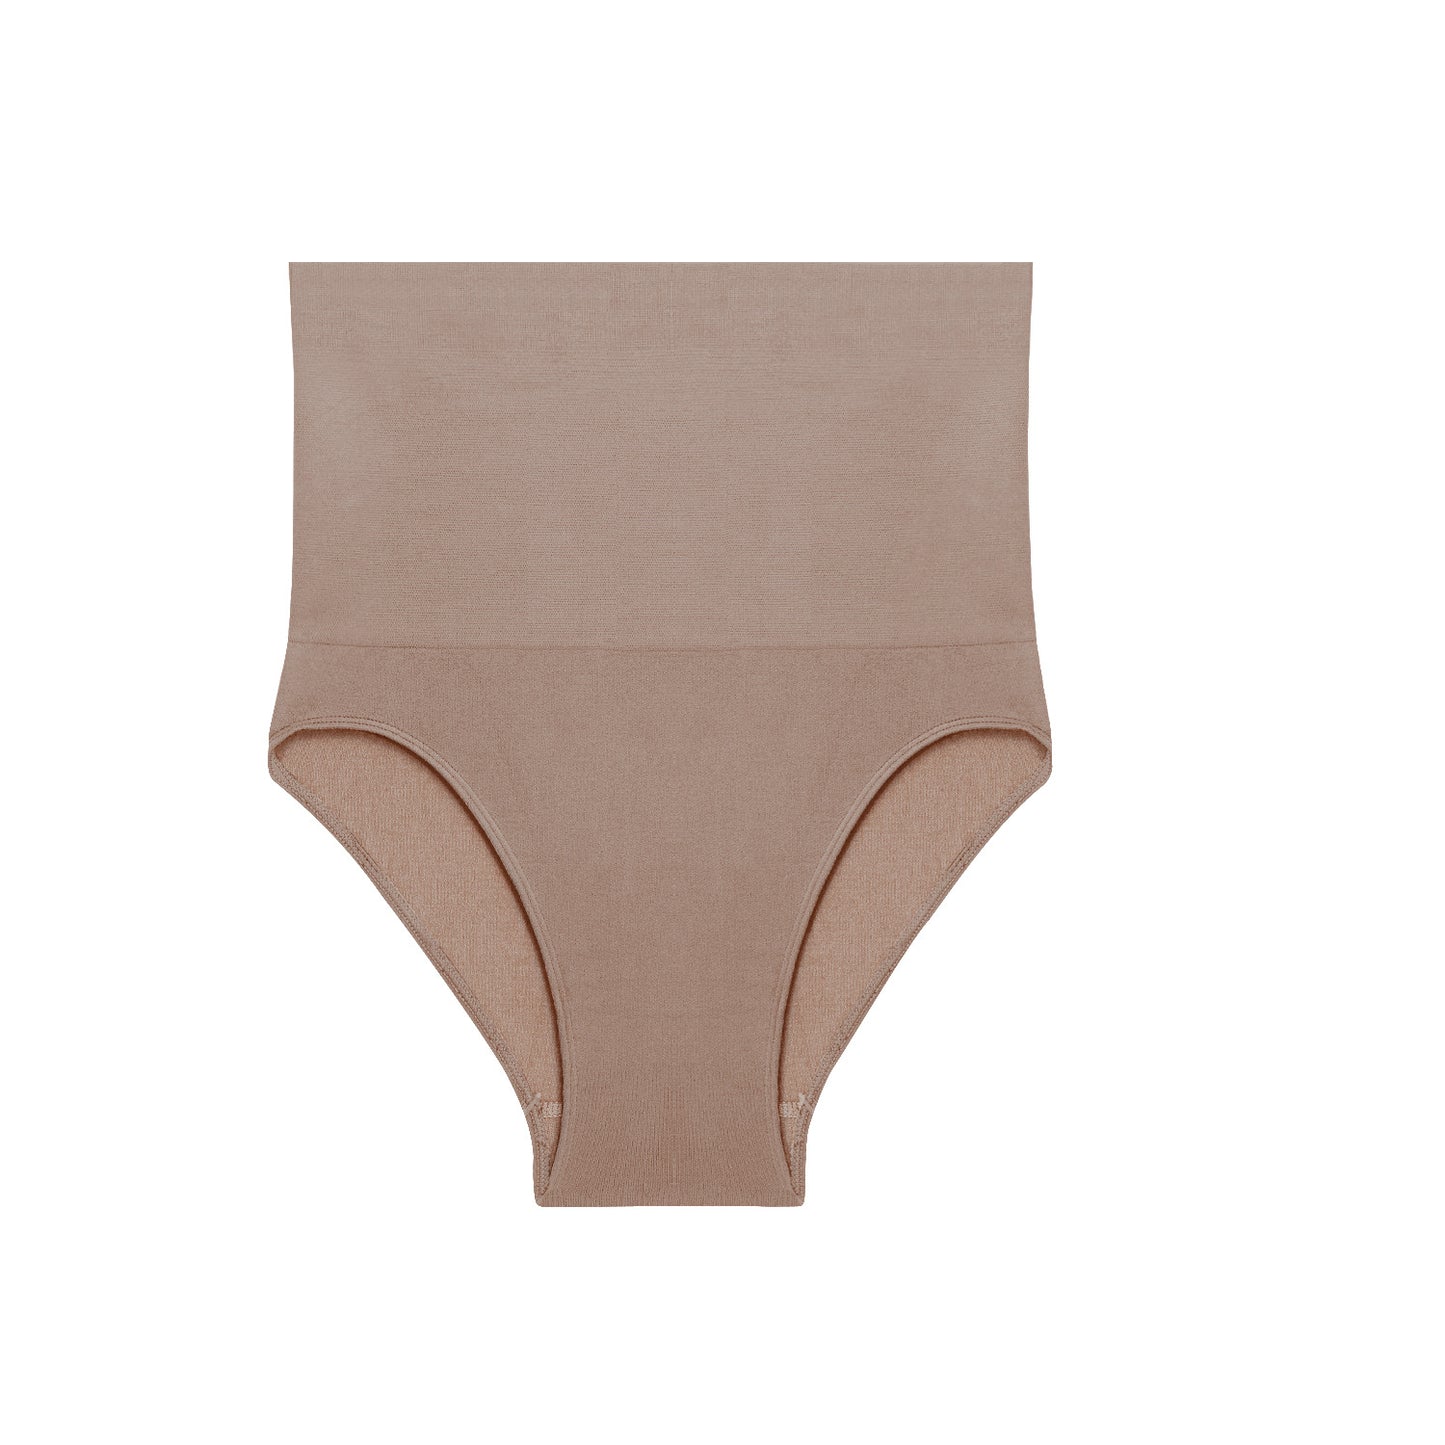 Women's Underwear Breathable Comfortable Nylon High Waist Body Shaping Hip Lifting